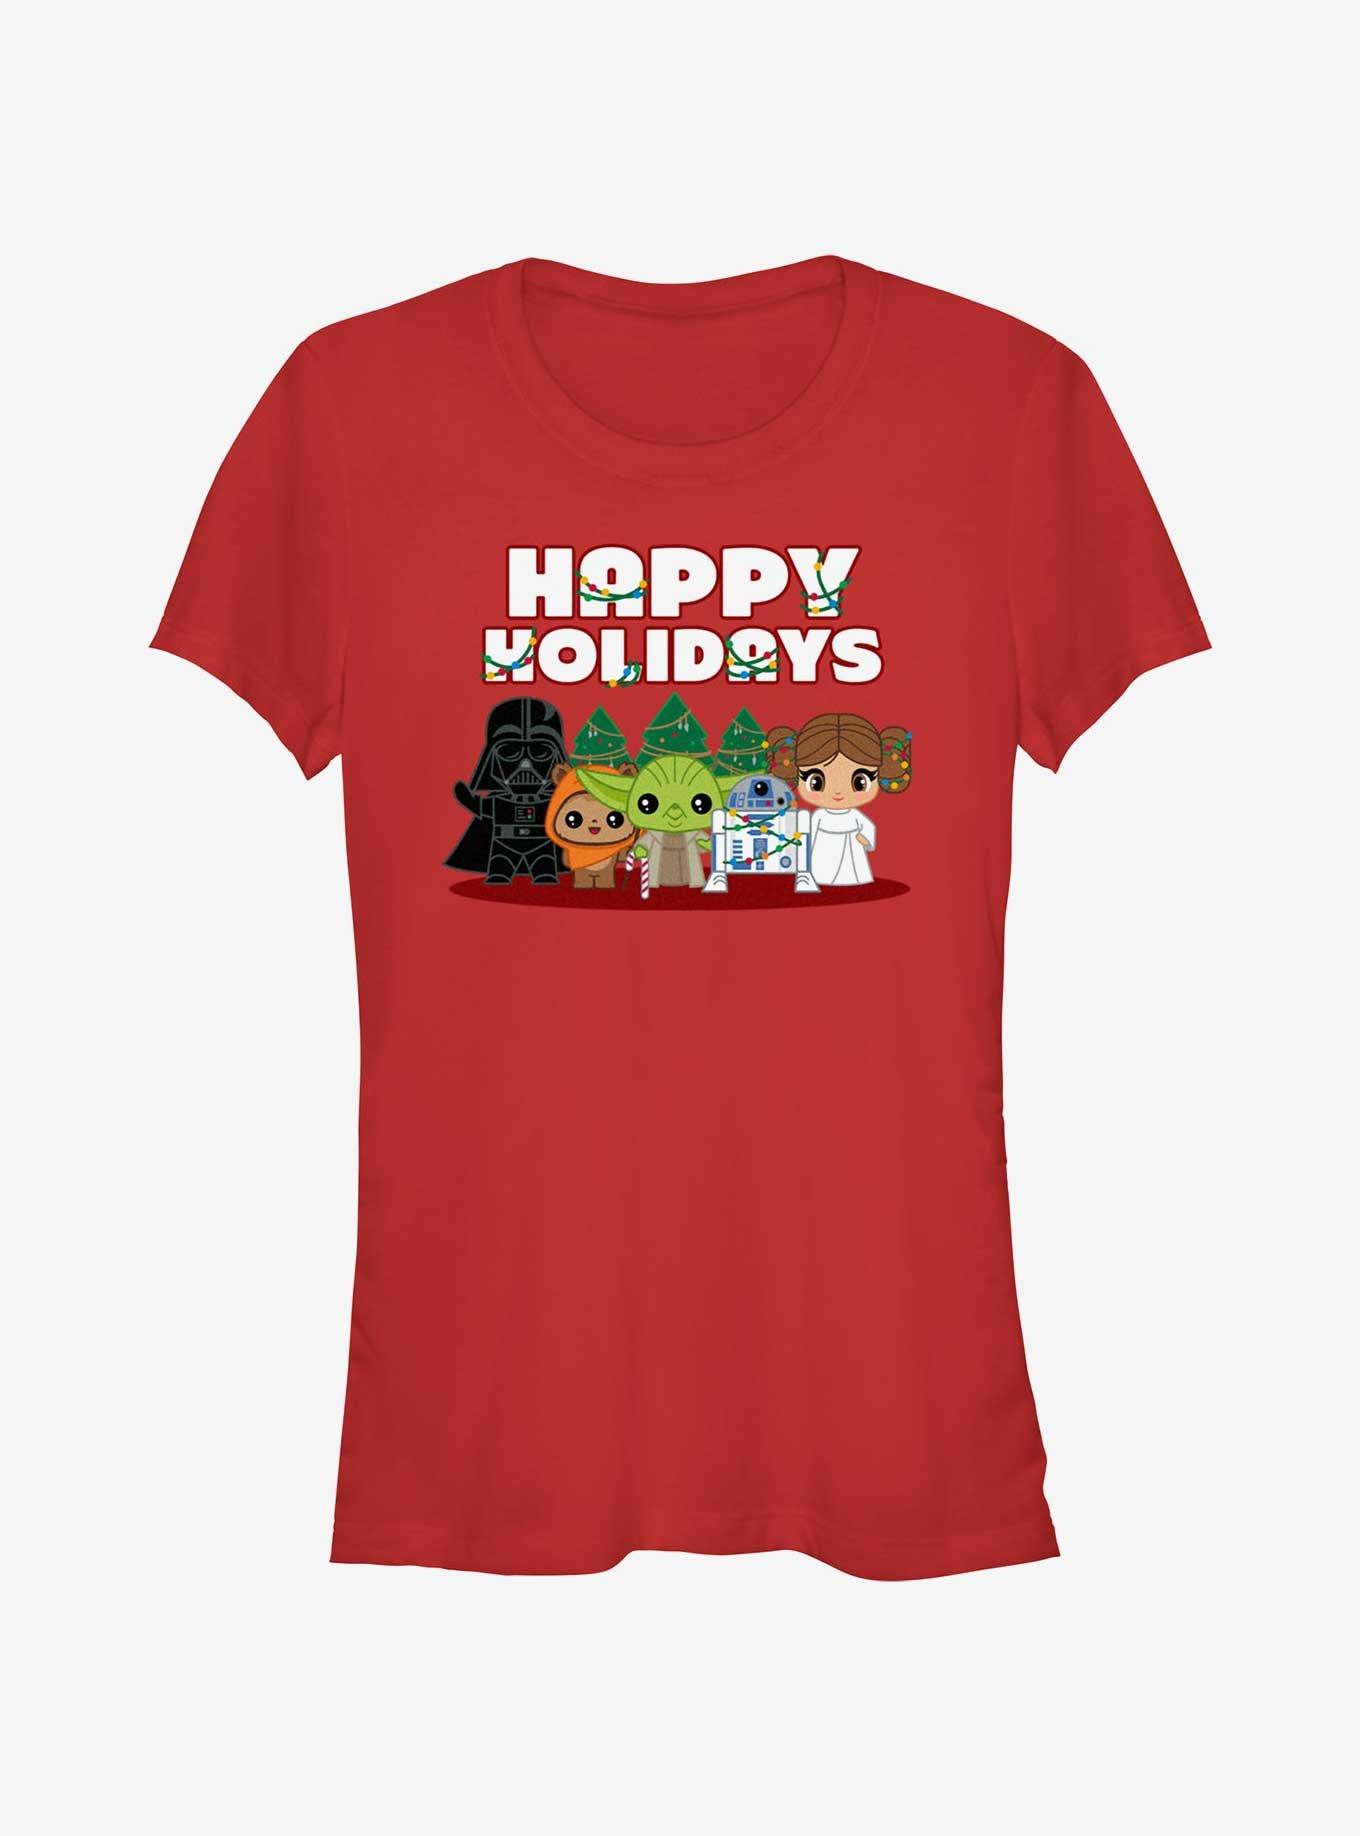 Star Wars Happy Holidays Chibis Girls T-Shirt